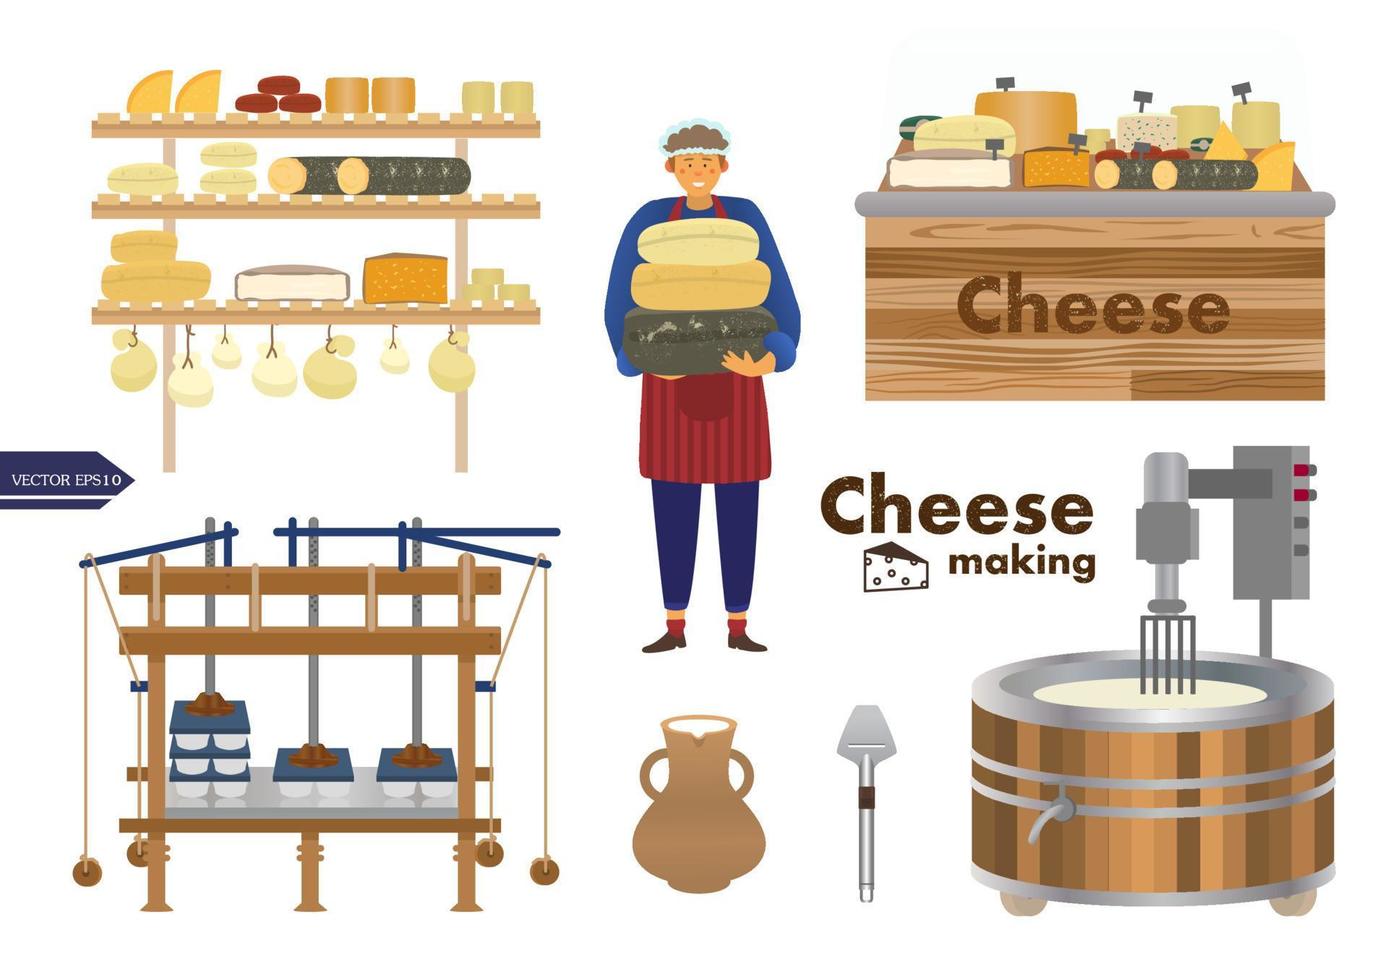 conjunto de vectores de fabricación de queso. equipo de producción láctea, quesero, logo, quesería, jarra de leche, prensa térmica, pasteurizador, cuchillo. pequeños negocios. estilo de dibujos animados plana.